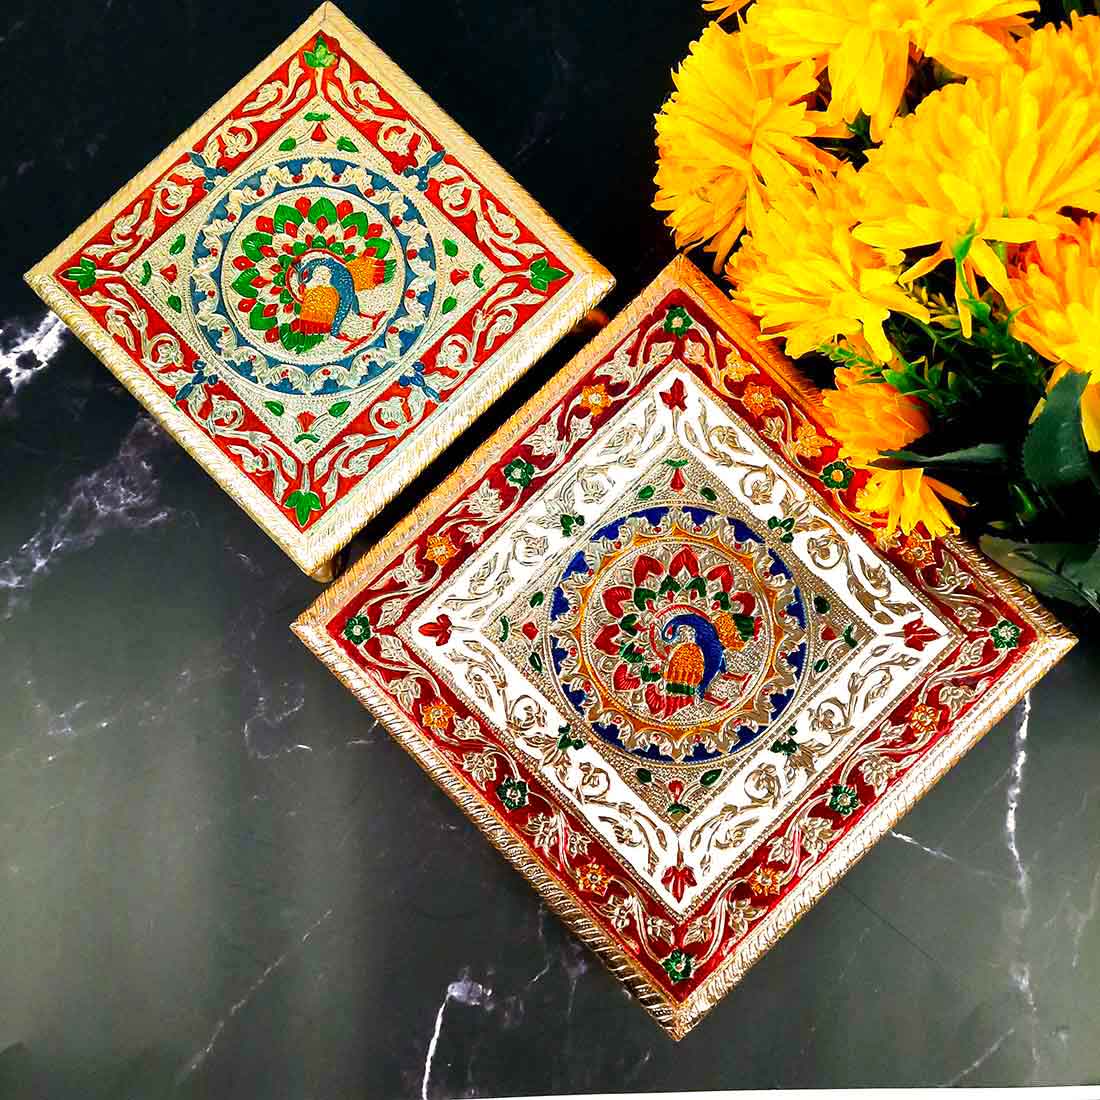 Puja Choki | Minakari Chowki Set | Decorative Bajot - For Pooja & Festivals - Set of 2 (8 Inch , 10 Inch) - ApkaMart #Style_Design 1